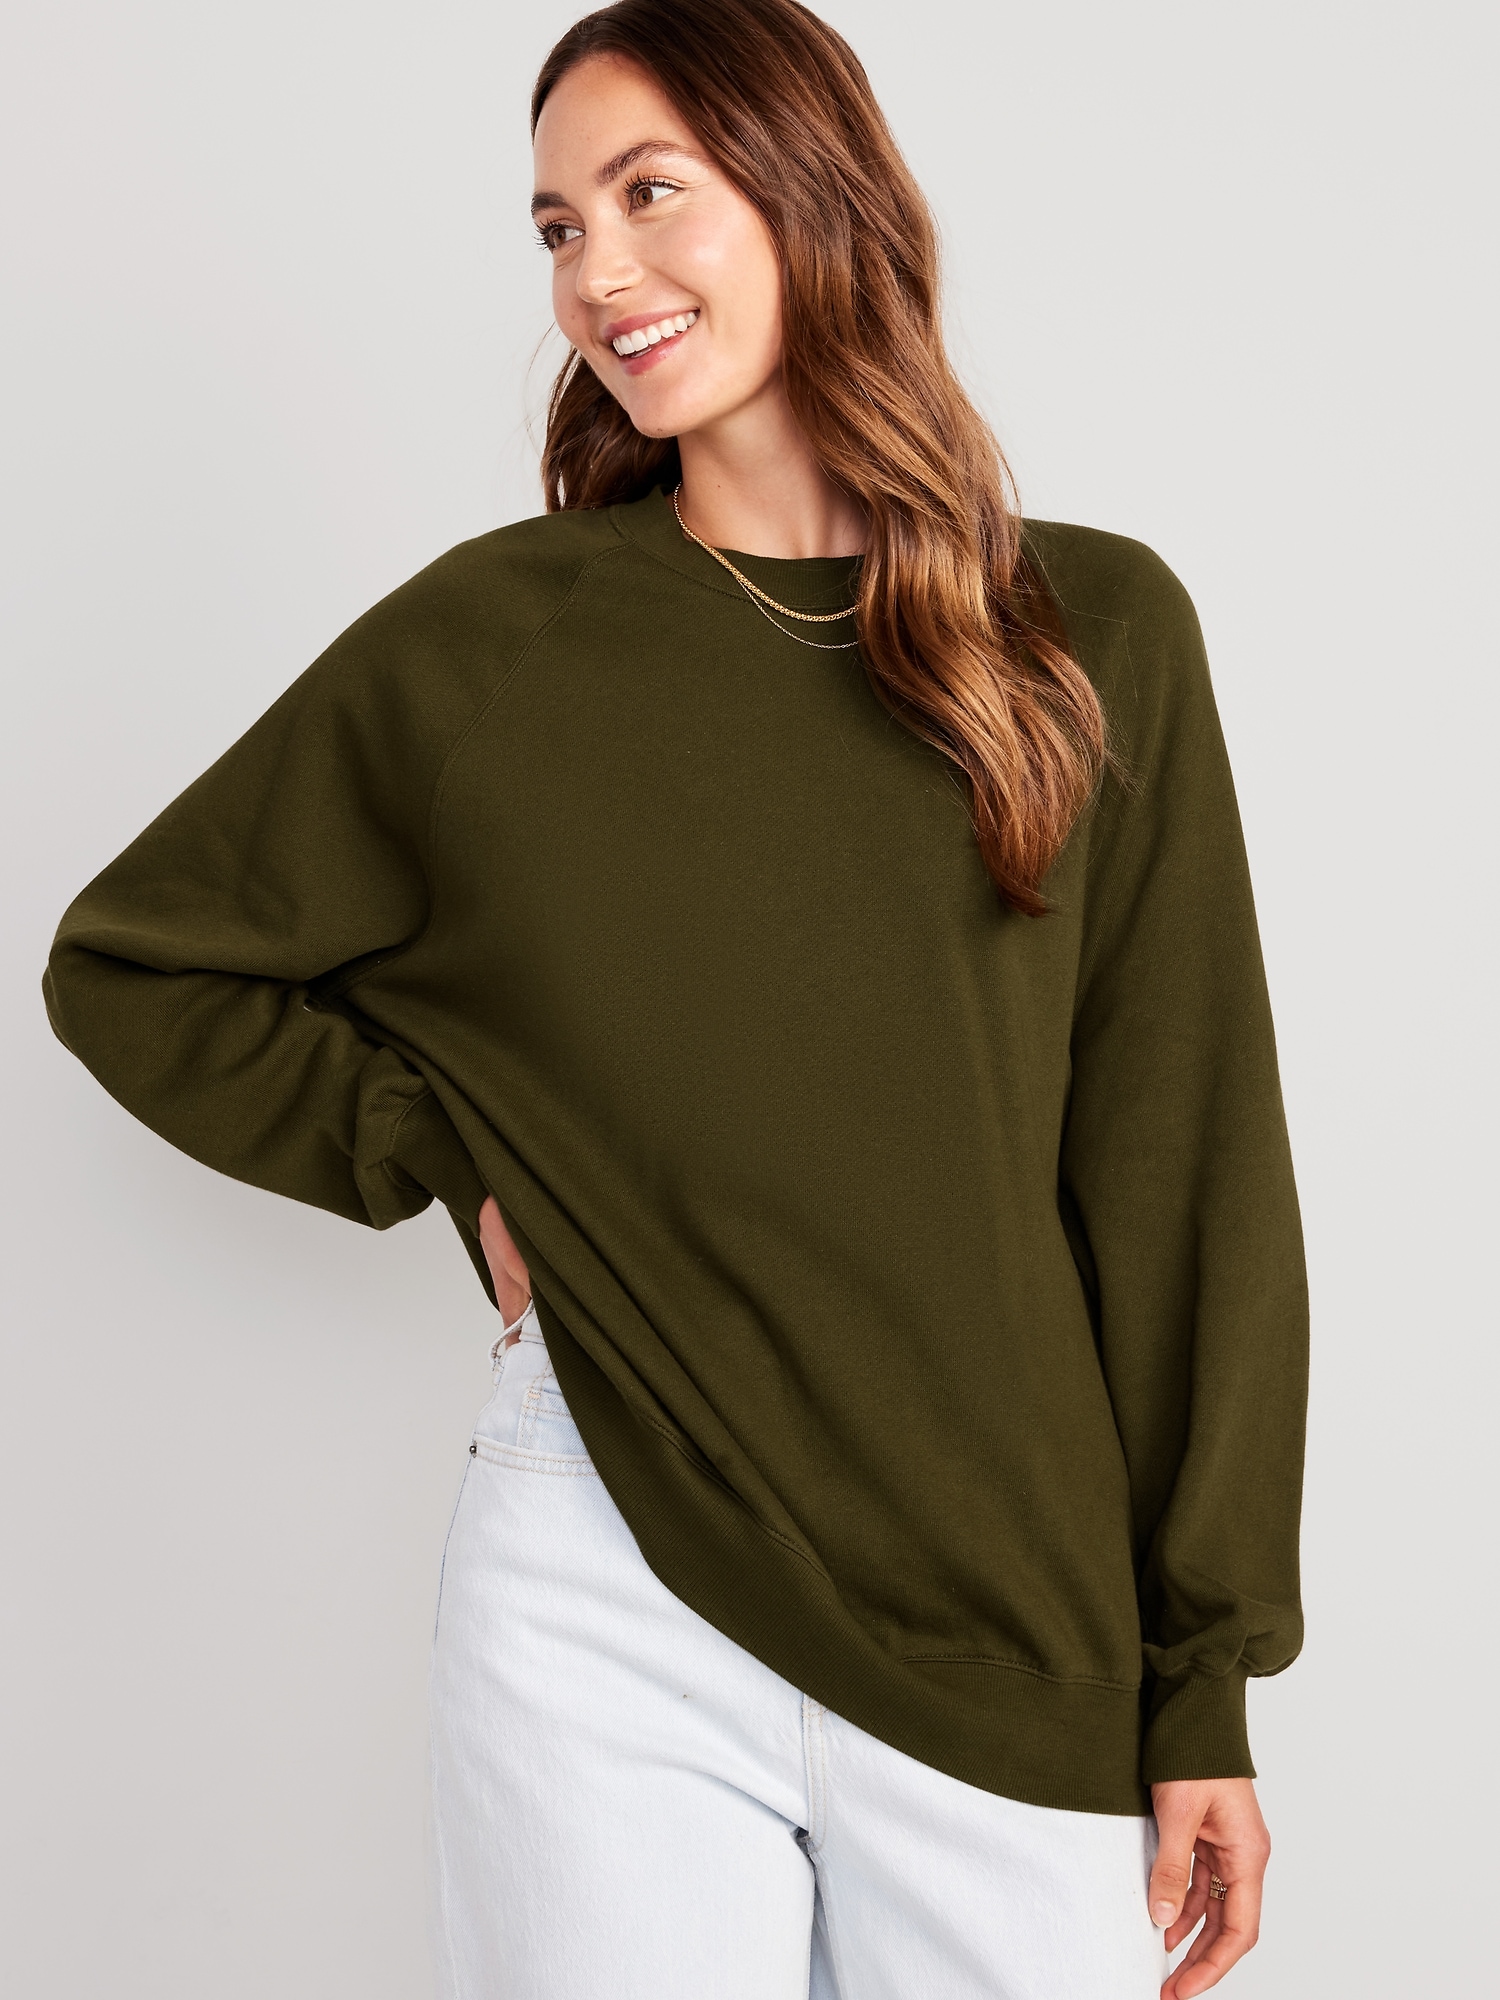 Oversized Vintage Tunic Sweatshirt for Women | Old Navy